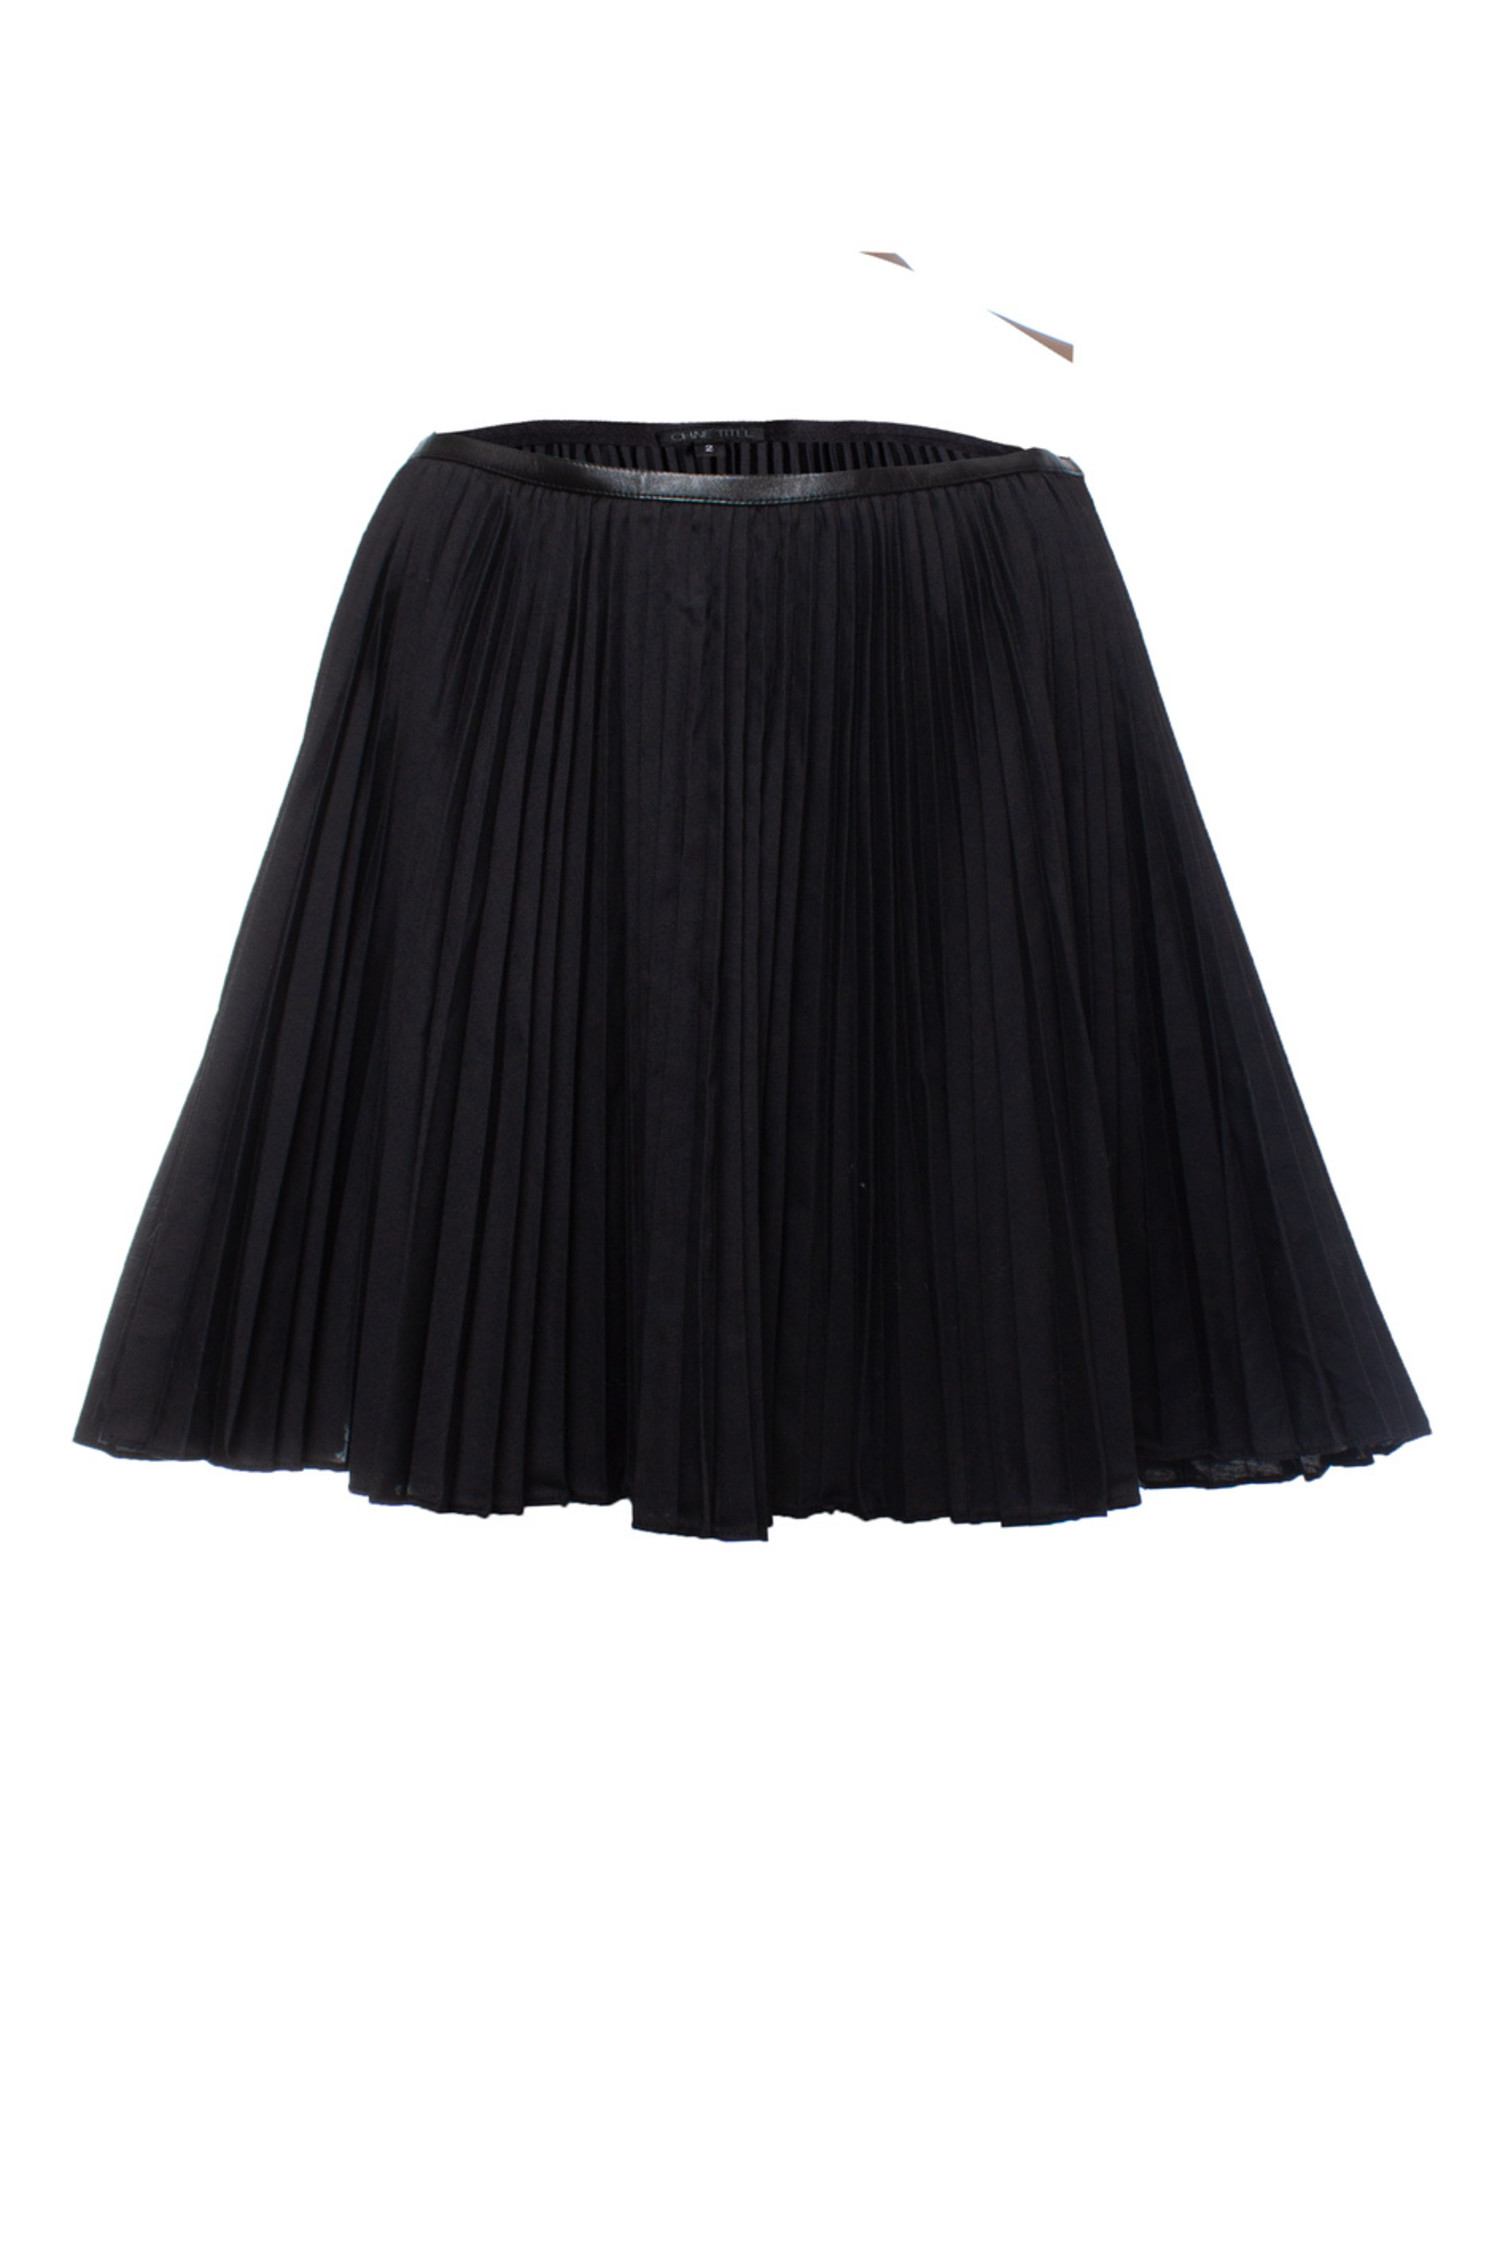 https://cdn.webshopapp.com/shops/89710/files/374430748/1500x4000x3/ohne-titel-black-pleated-skirt.jpg